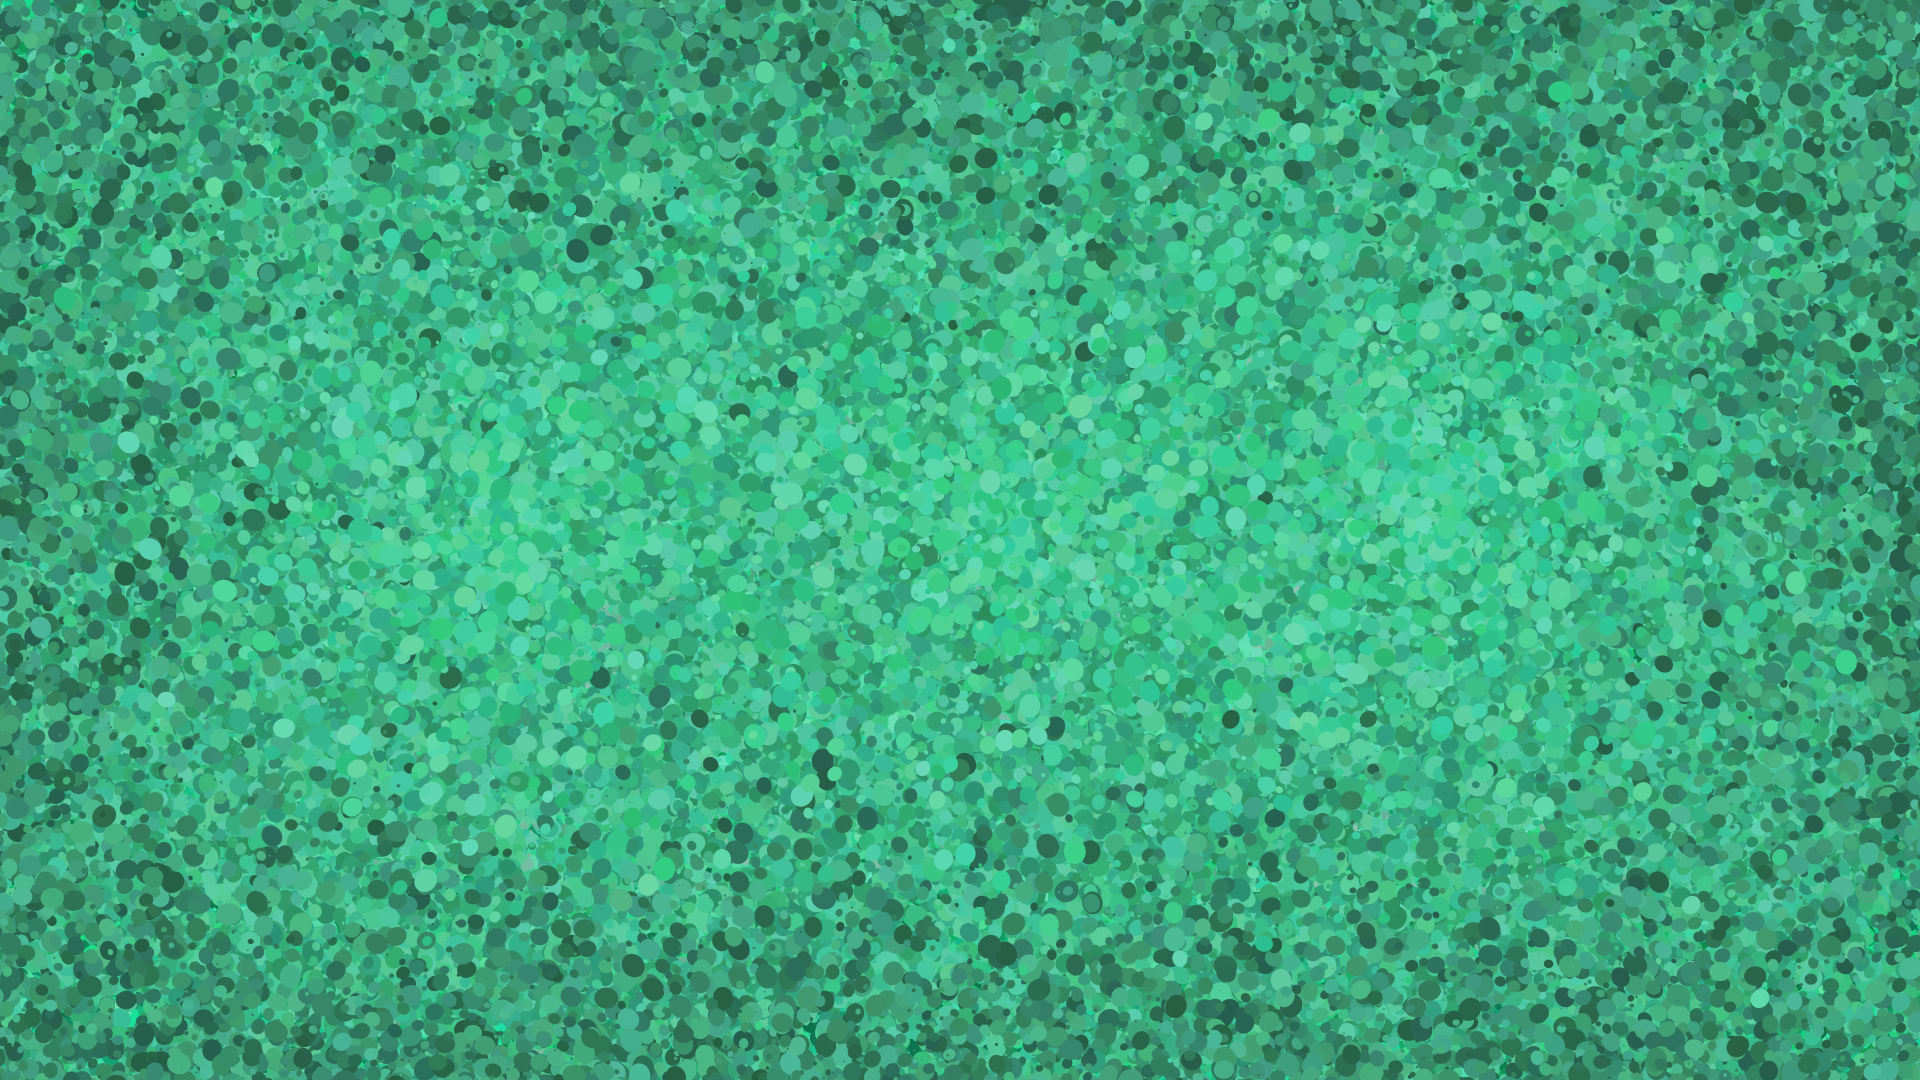 General 1920x1080 minimalism dots texture green green background